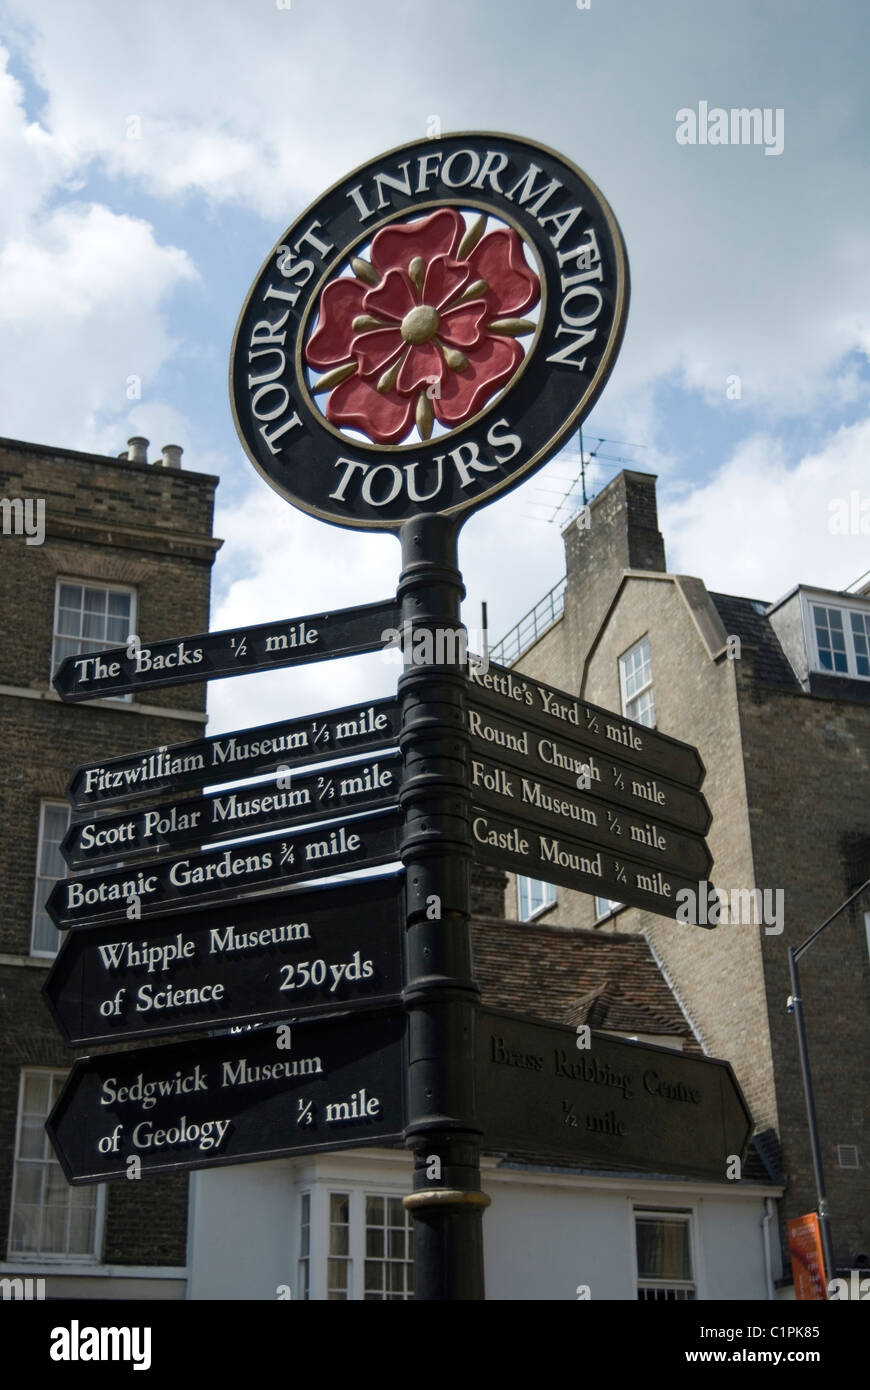 England, Cambridge, tourist information signs Stock Photo